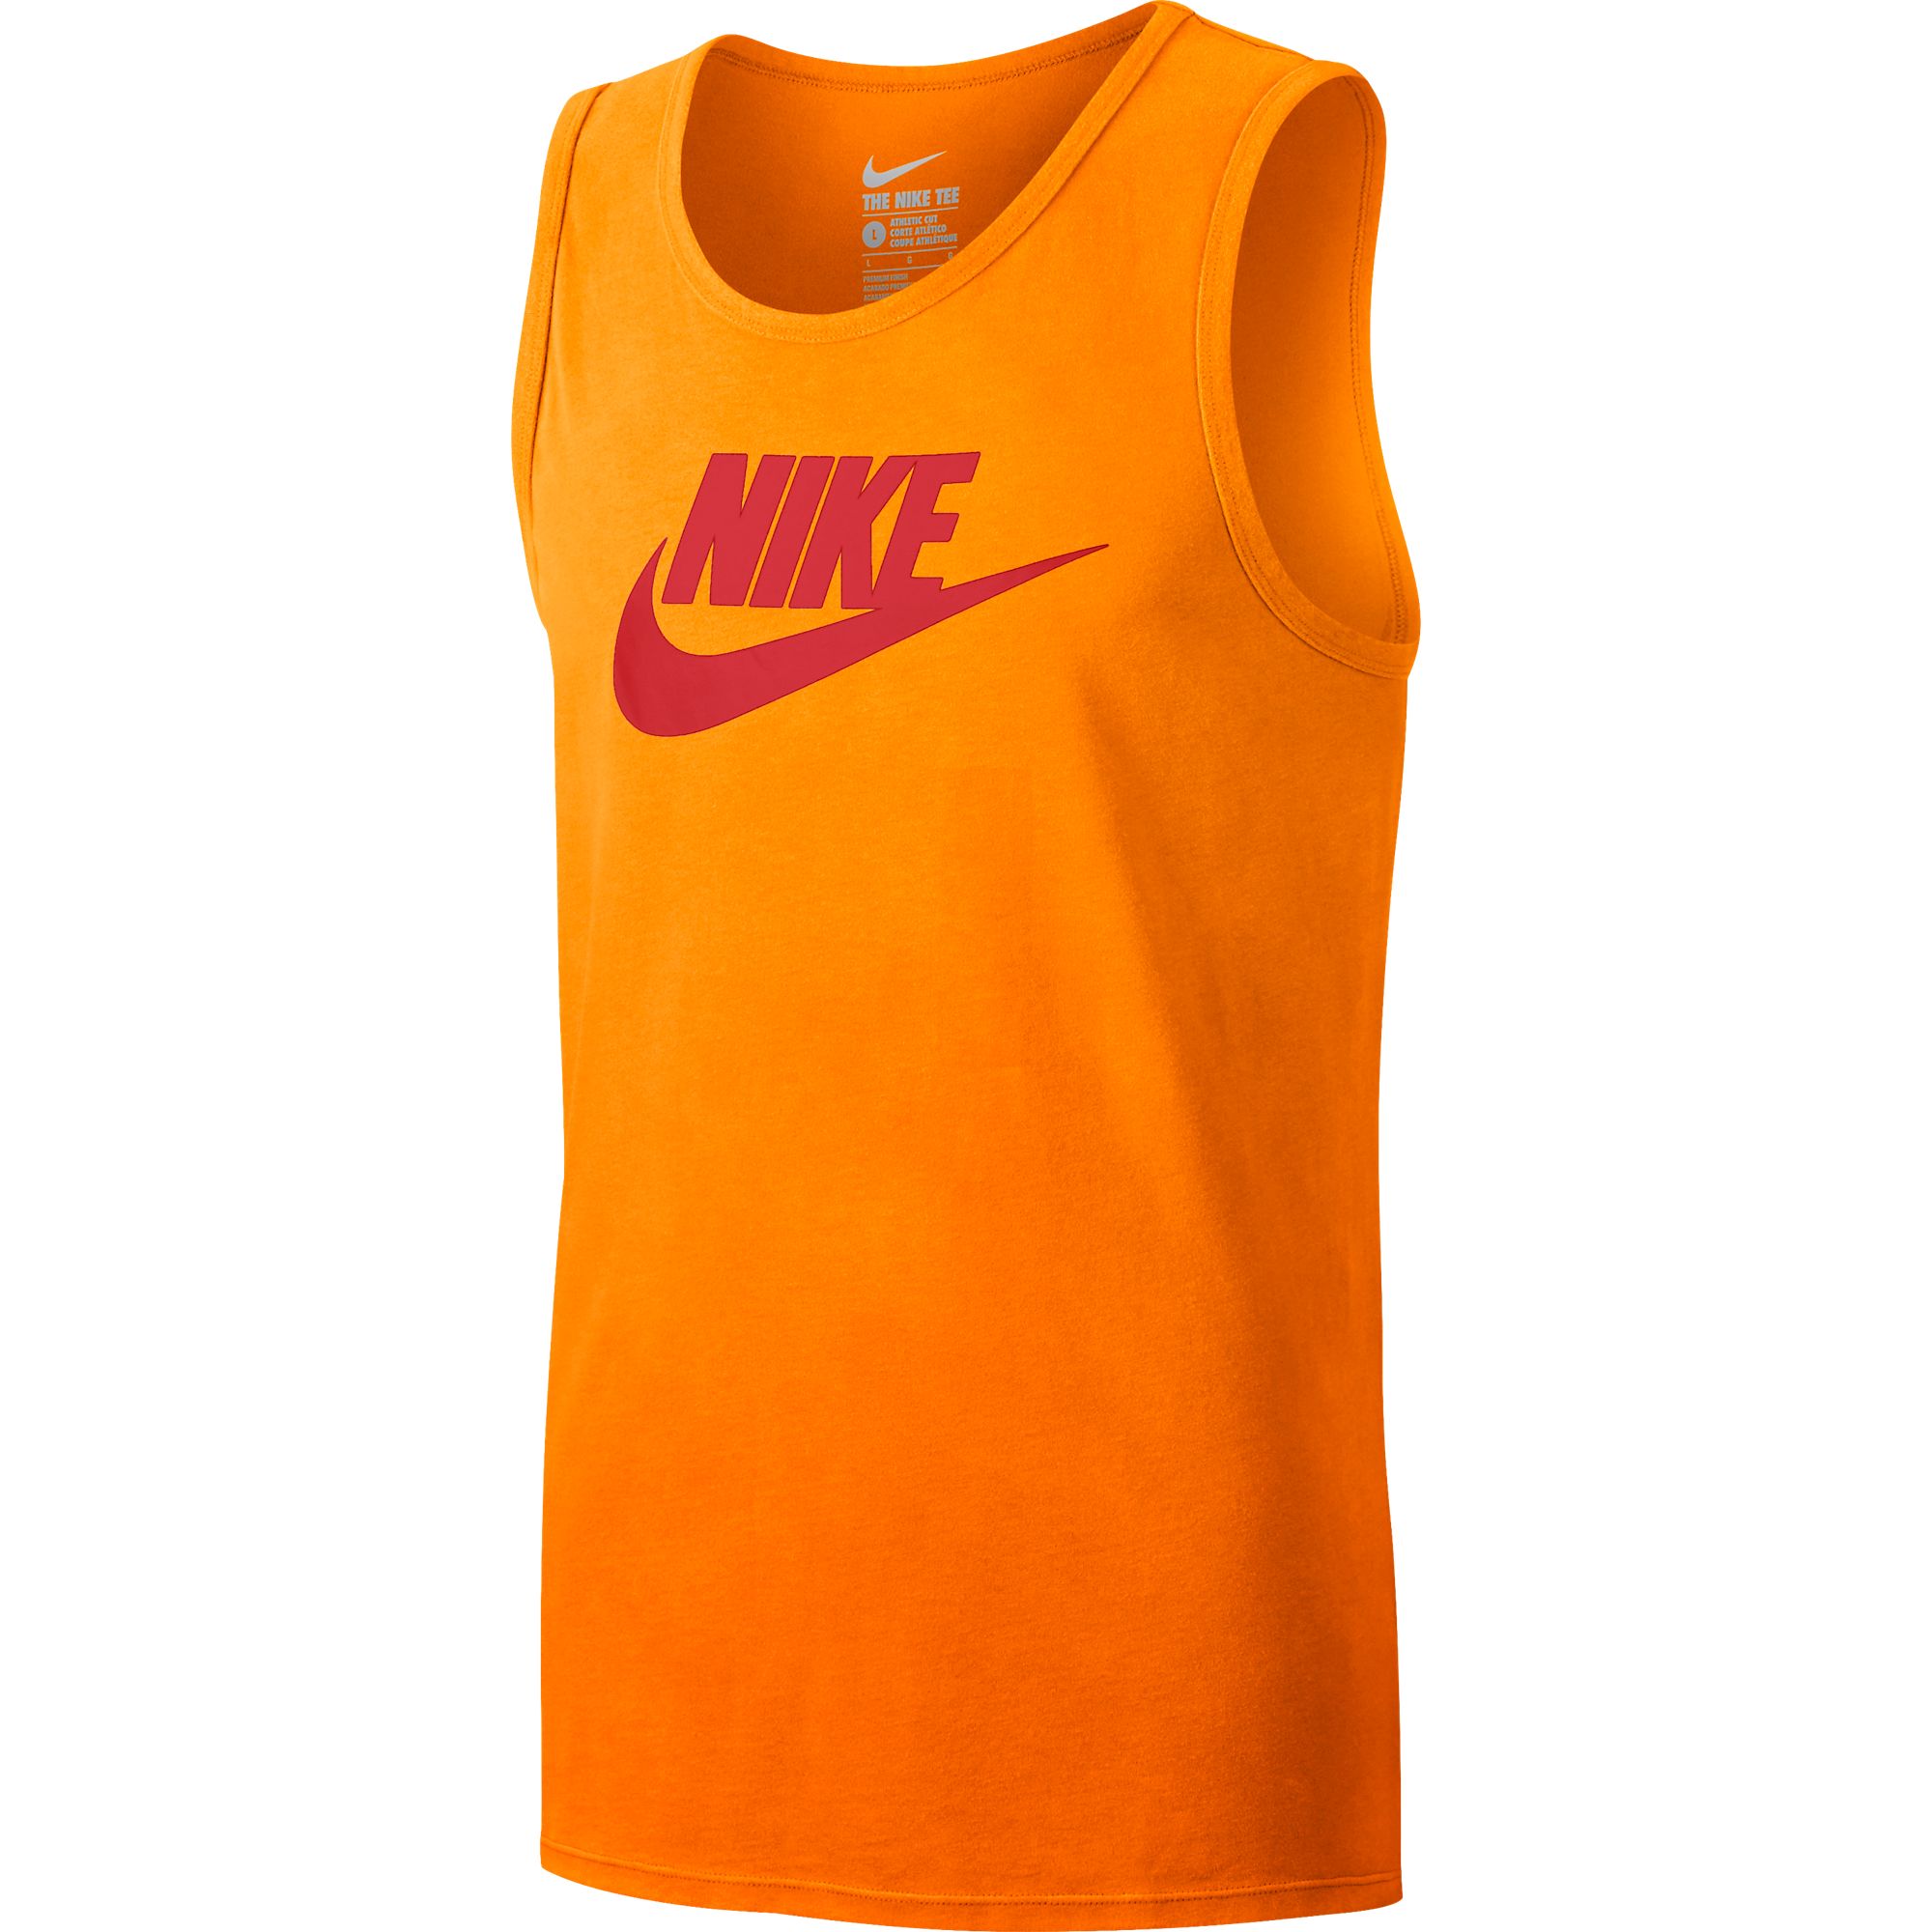 Nike Futura Solstice Men's Tank Top Athletic Orange/Red 729833-868 | eBay